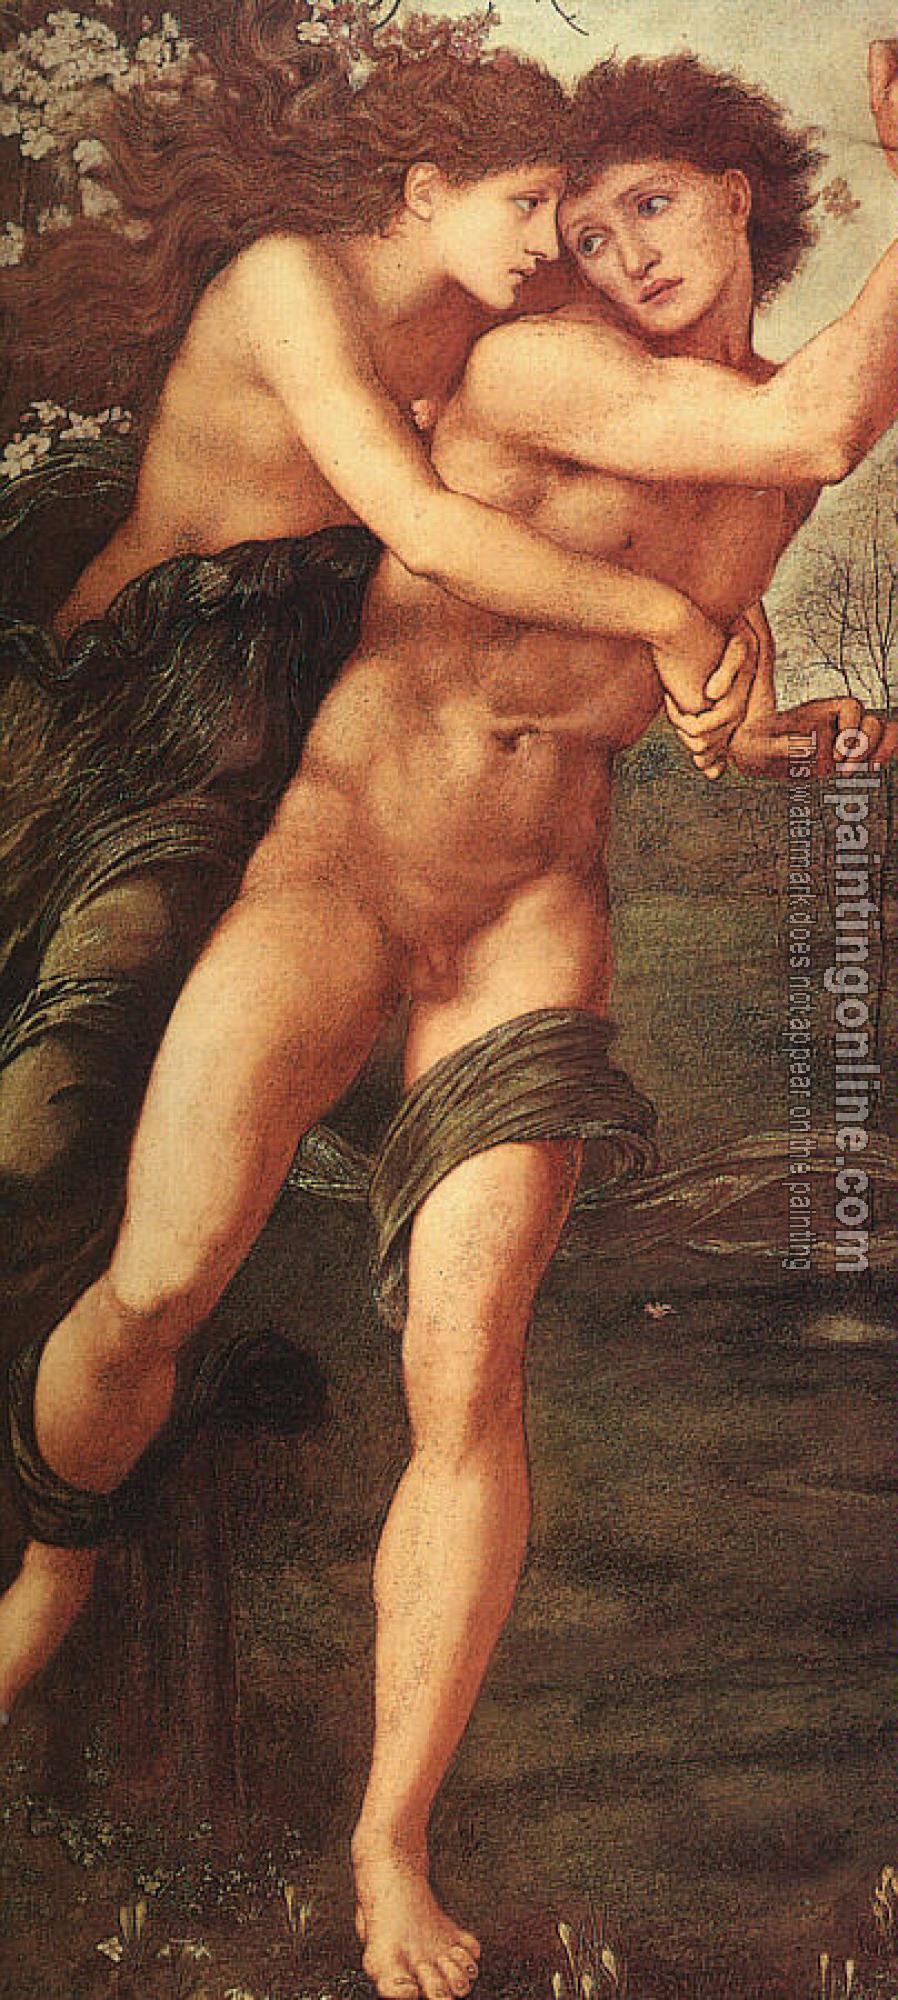 Burne-Jones, Sir Edward Coley - Phyllis and Demophoon